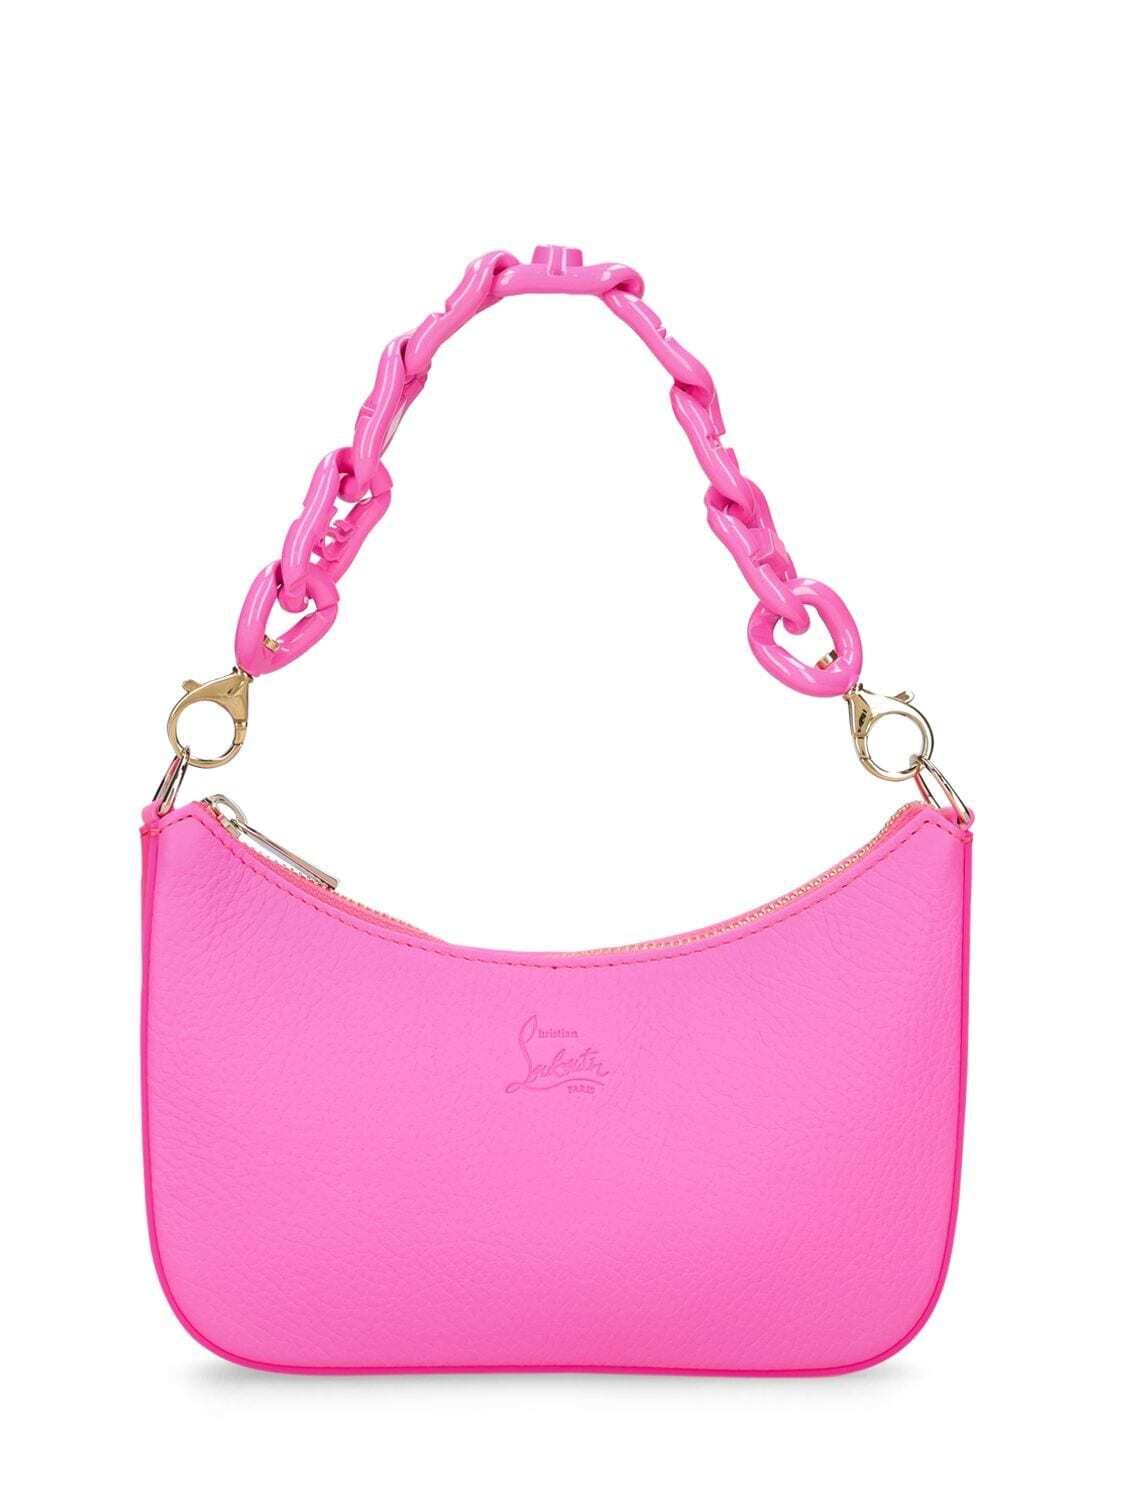 CHRISTIAN LOUBOUTIN Mini Loubila Leather Chain Shoulder Bag in pink